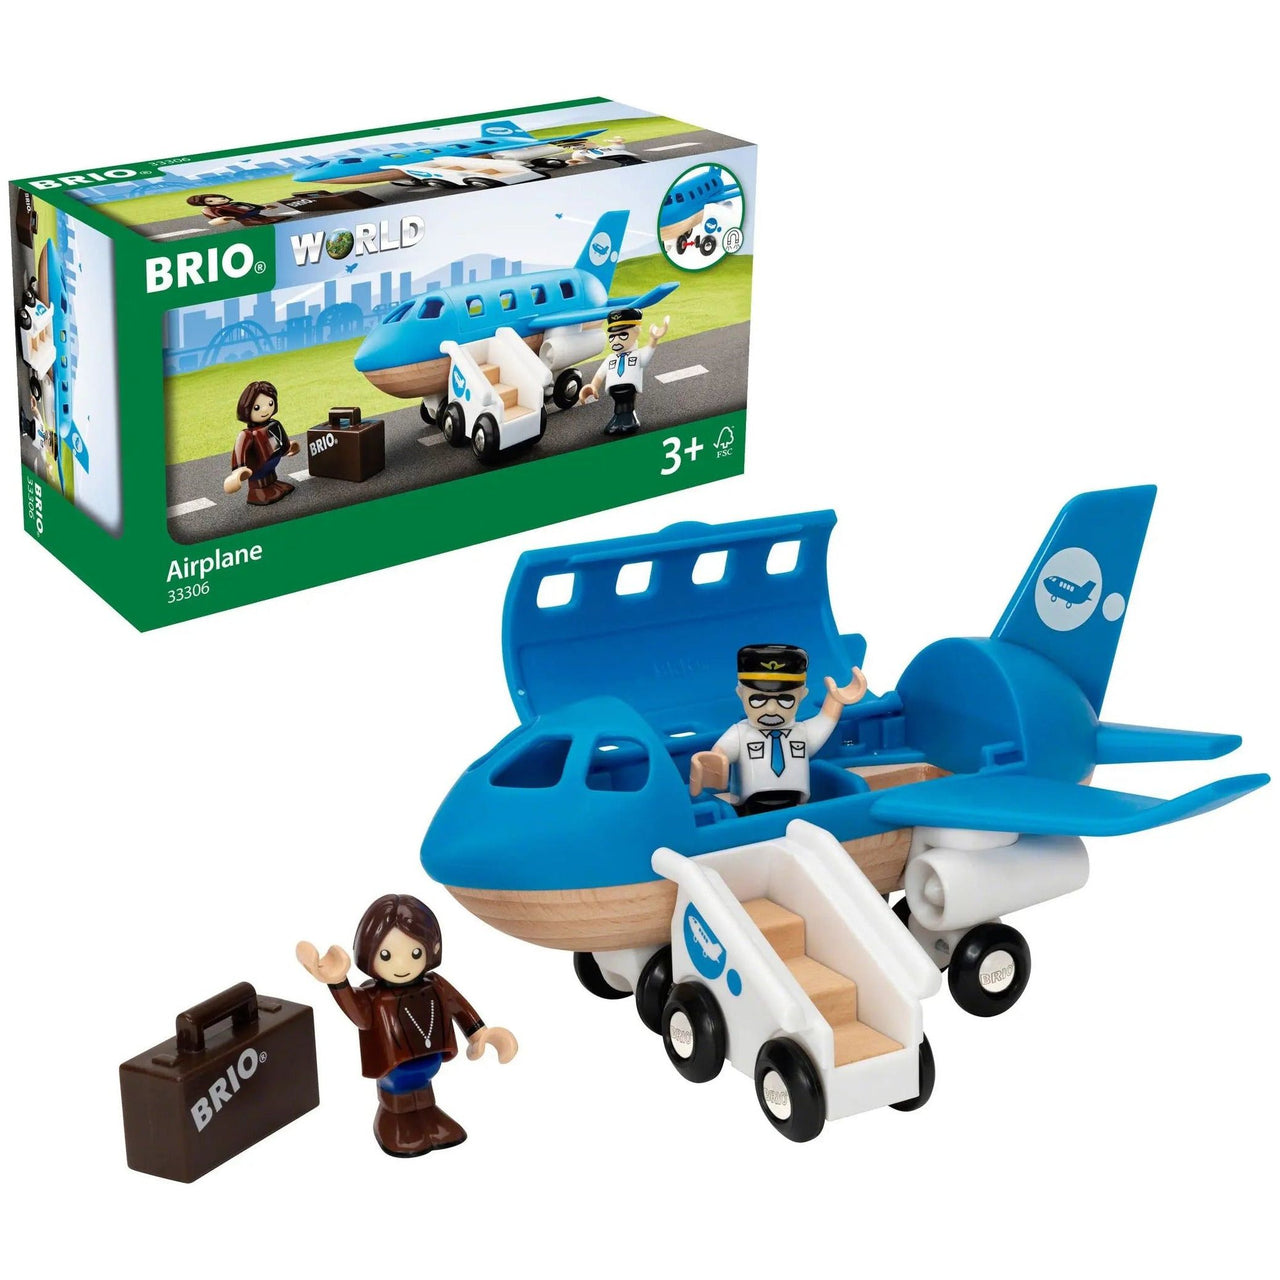 Brio World Aeroplane BRIO